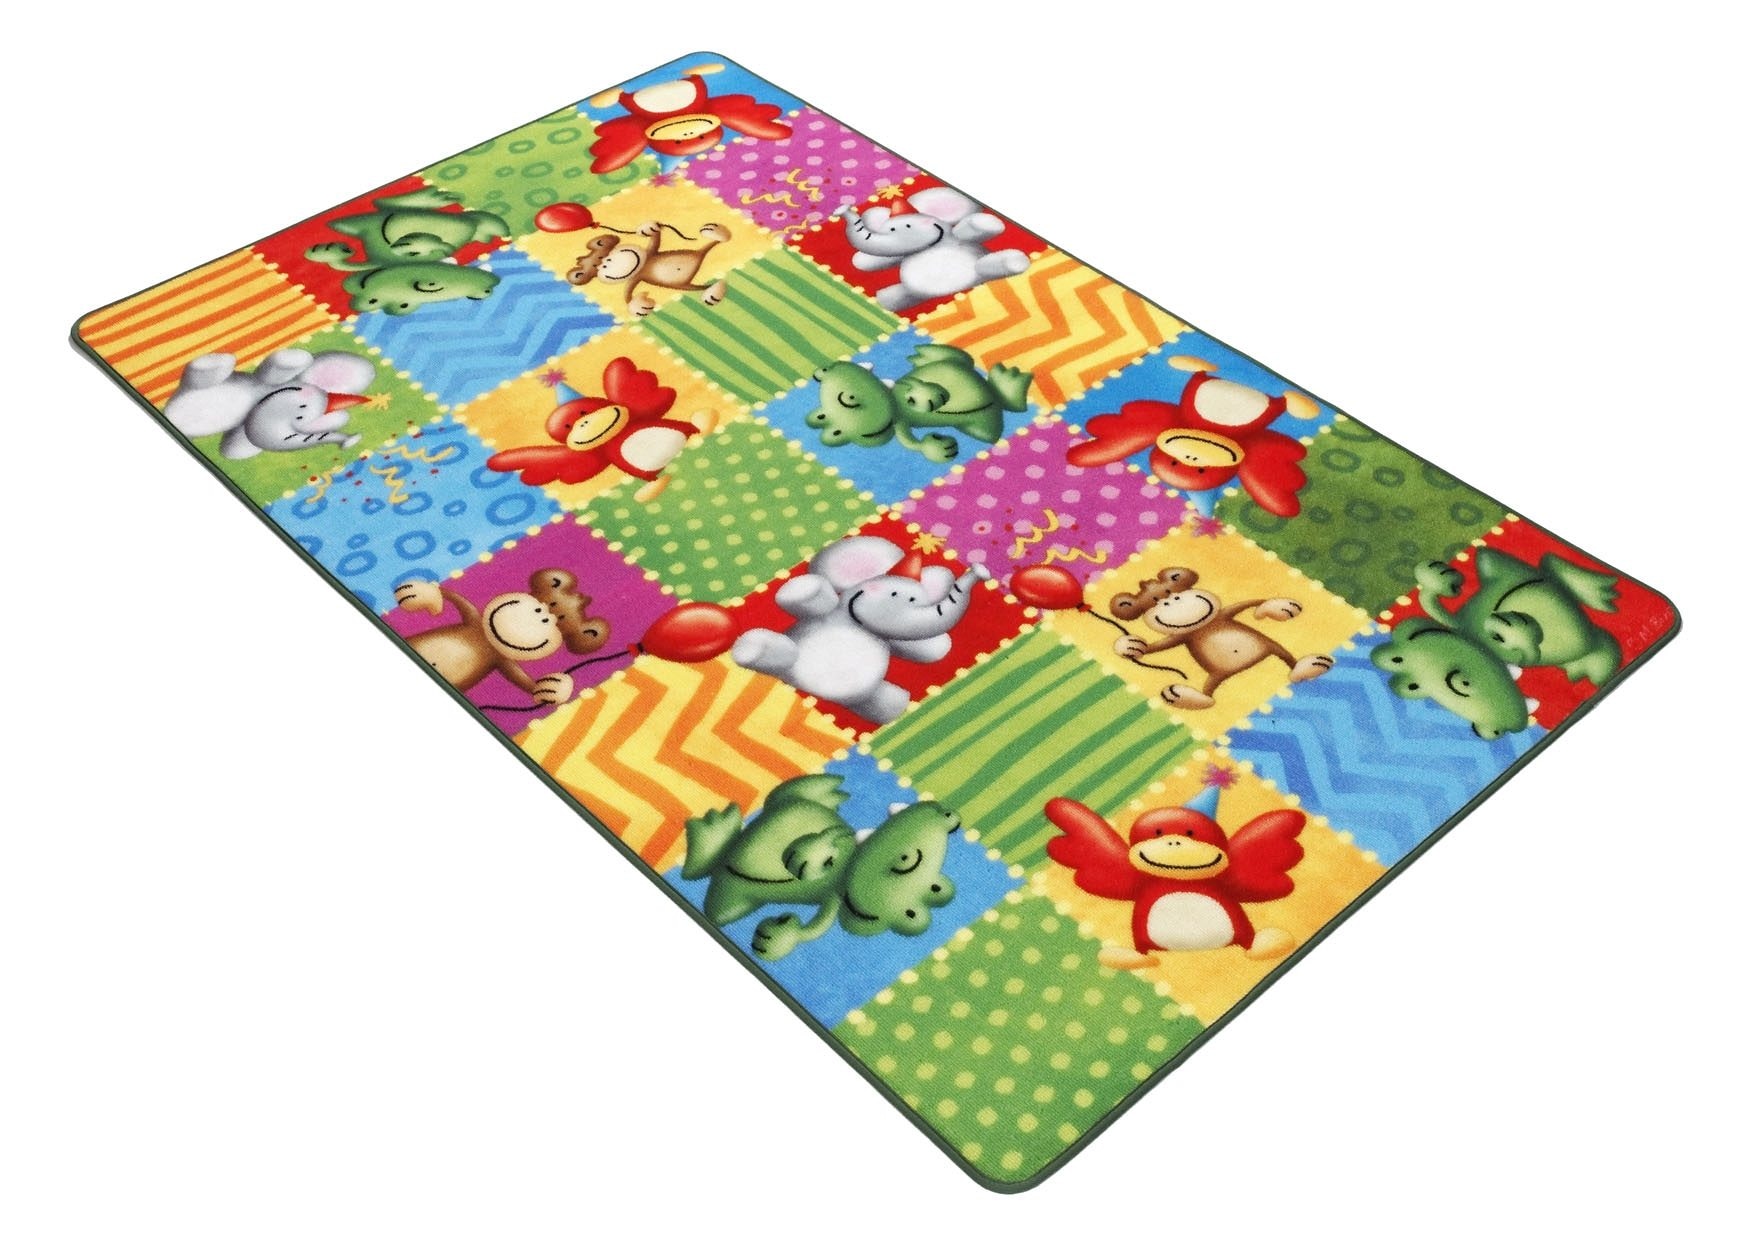 Böing Carpet Fußmatte »Lovely Kids LK-5«, rechteckig, Schmutzfangmatte, Druckteppich, Motiv Zootiere, Kinderzimmer